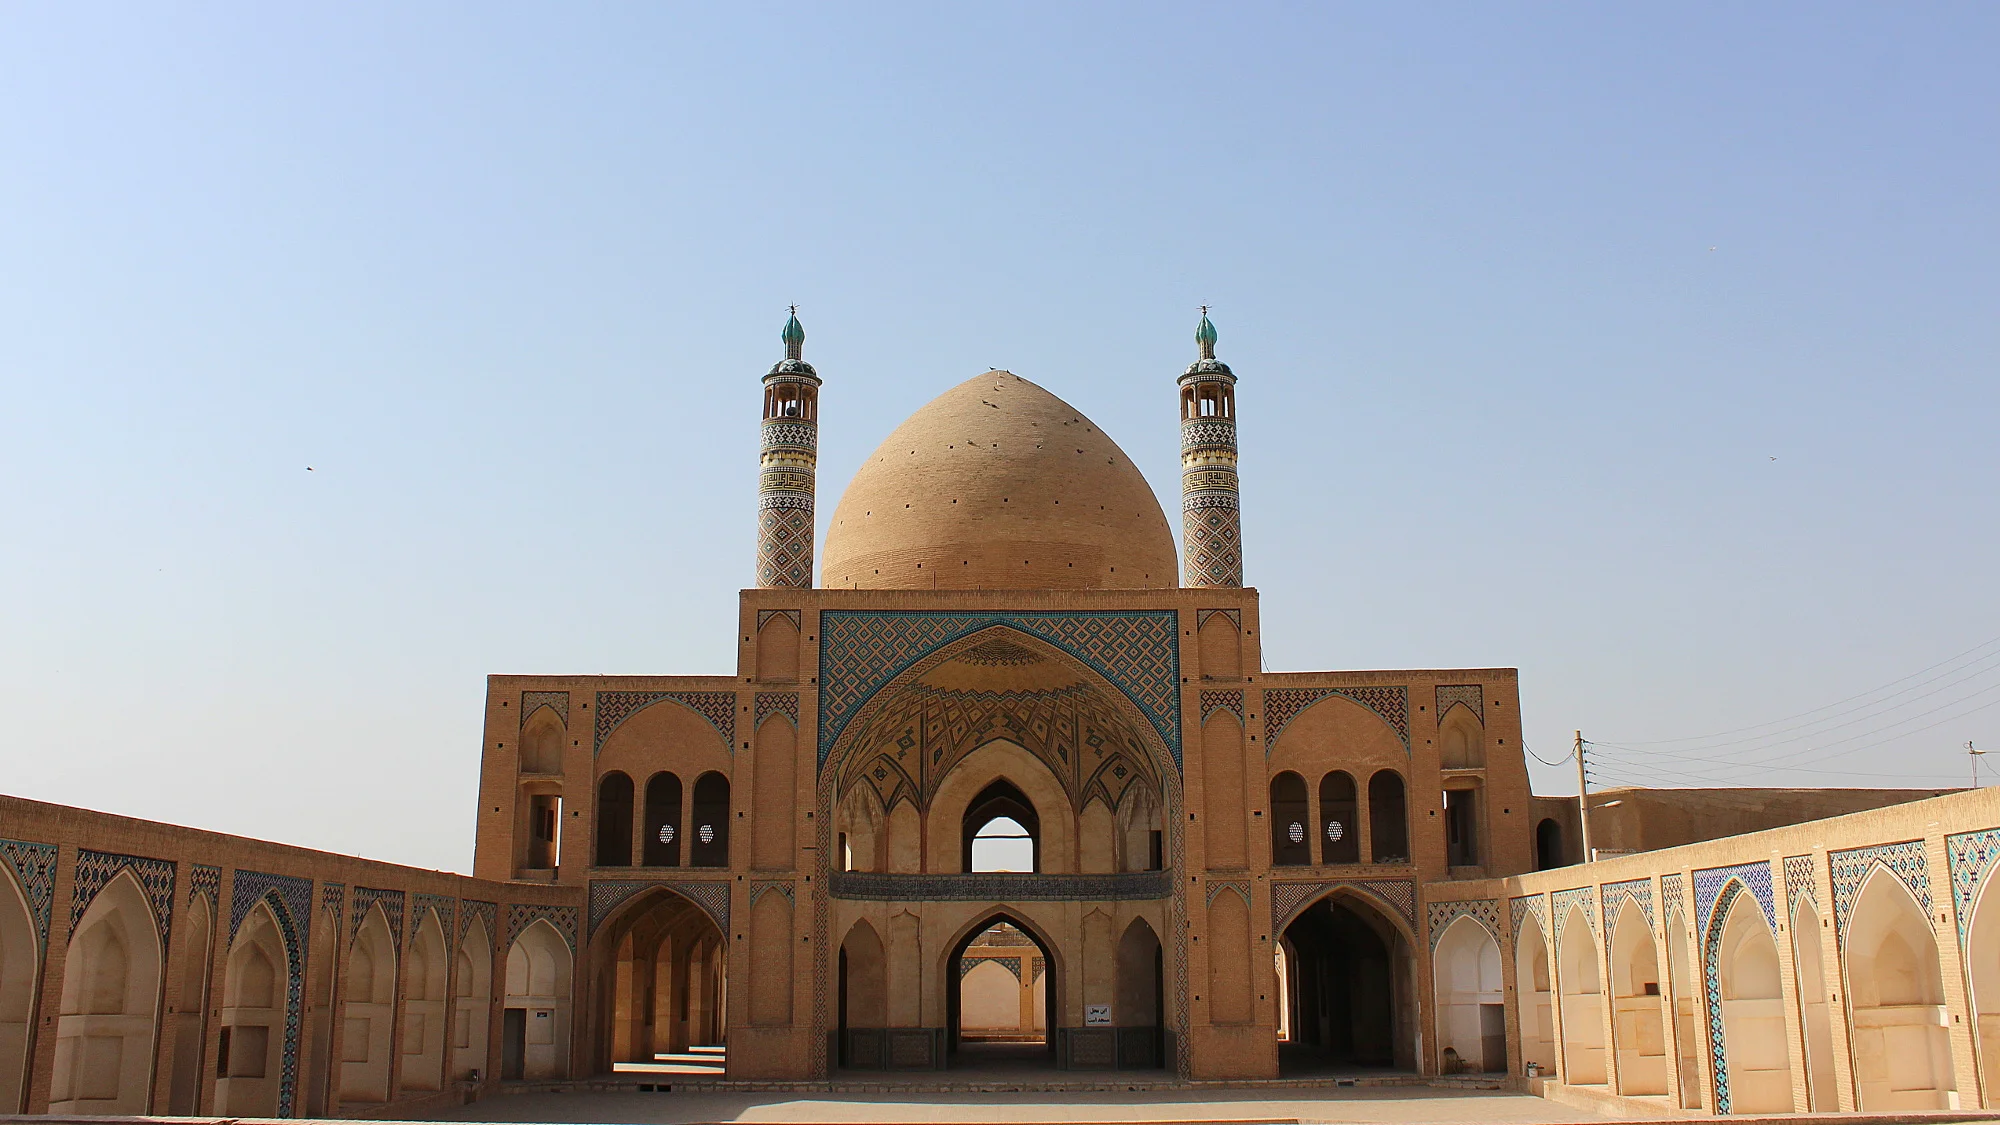 Agha Bozorg Mosque yard in Kashan, Iran.